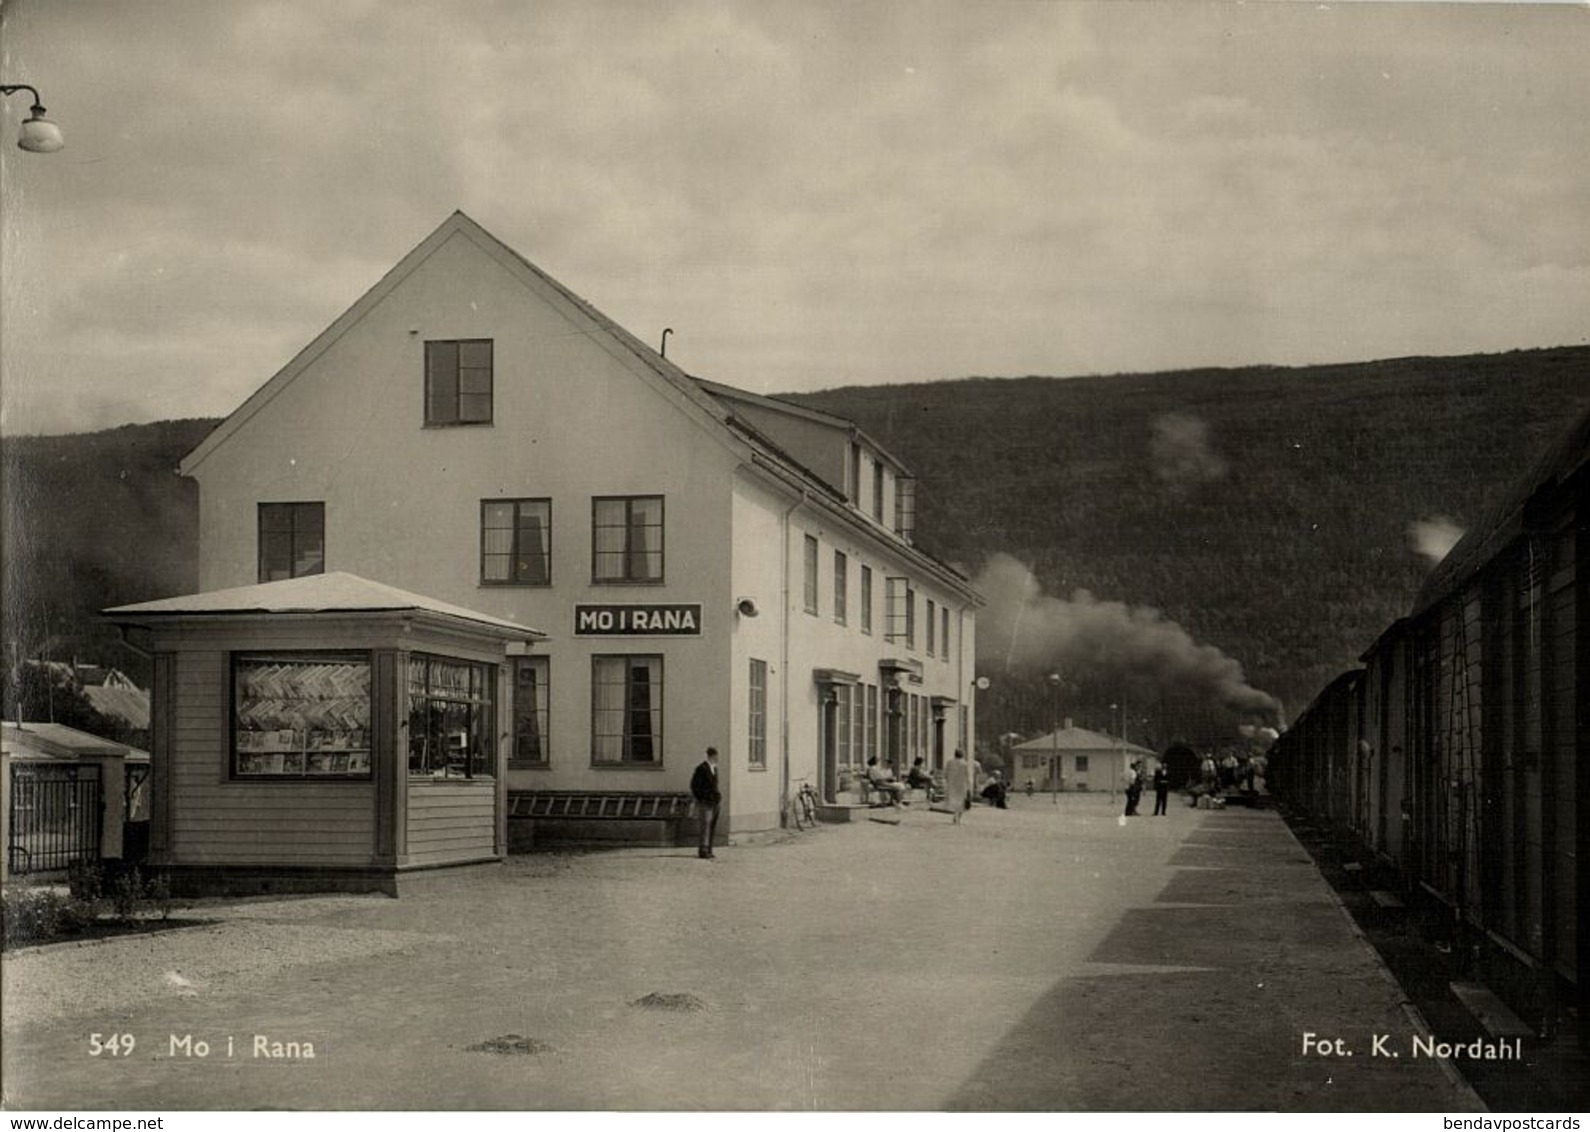 Norway Norge, MO I RANA, Nordland, Railway Station (1950s) RPPC Postcard - Norway